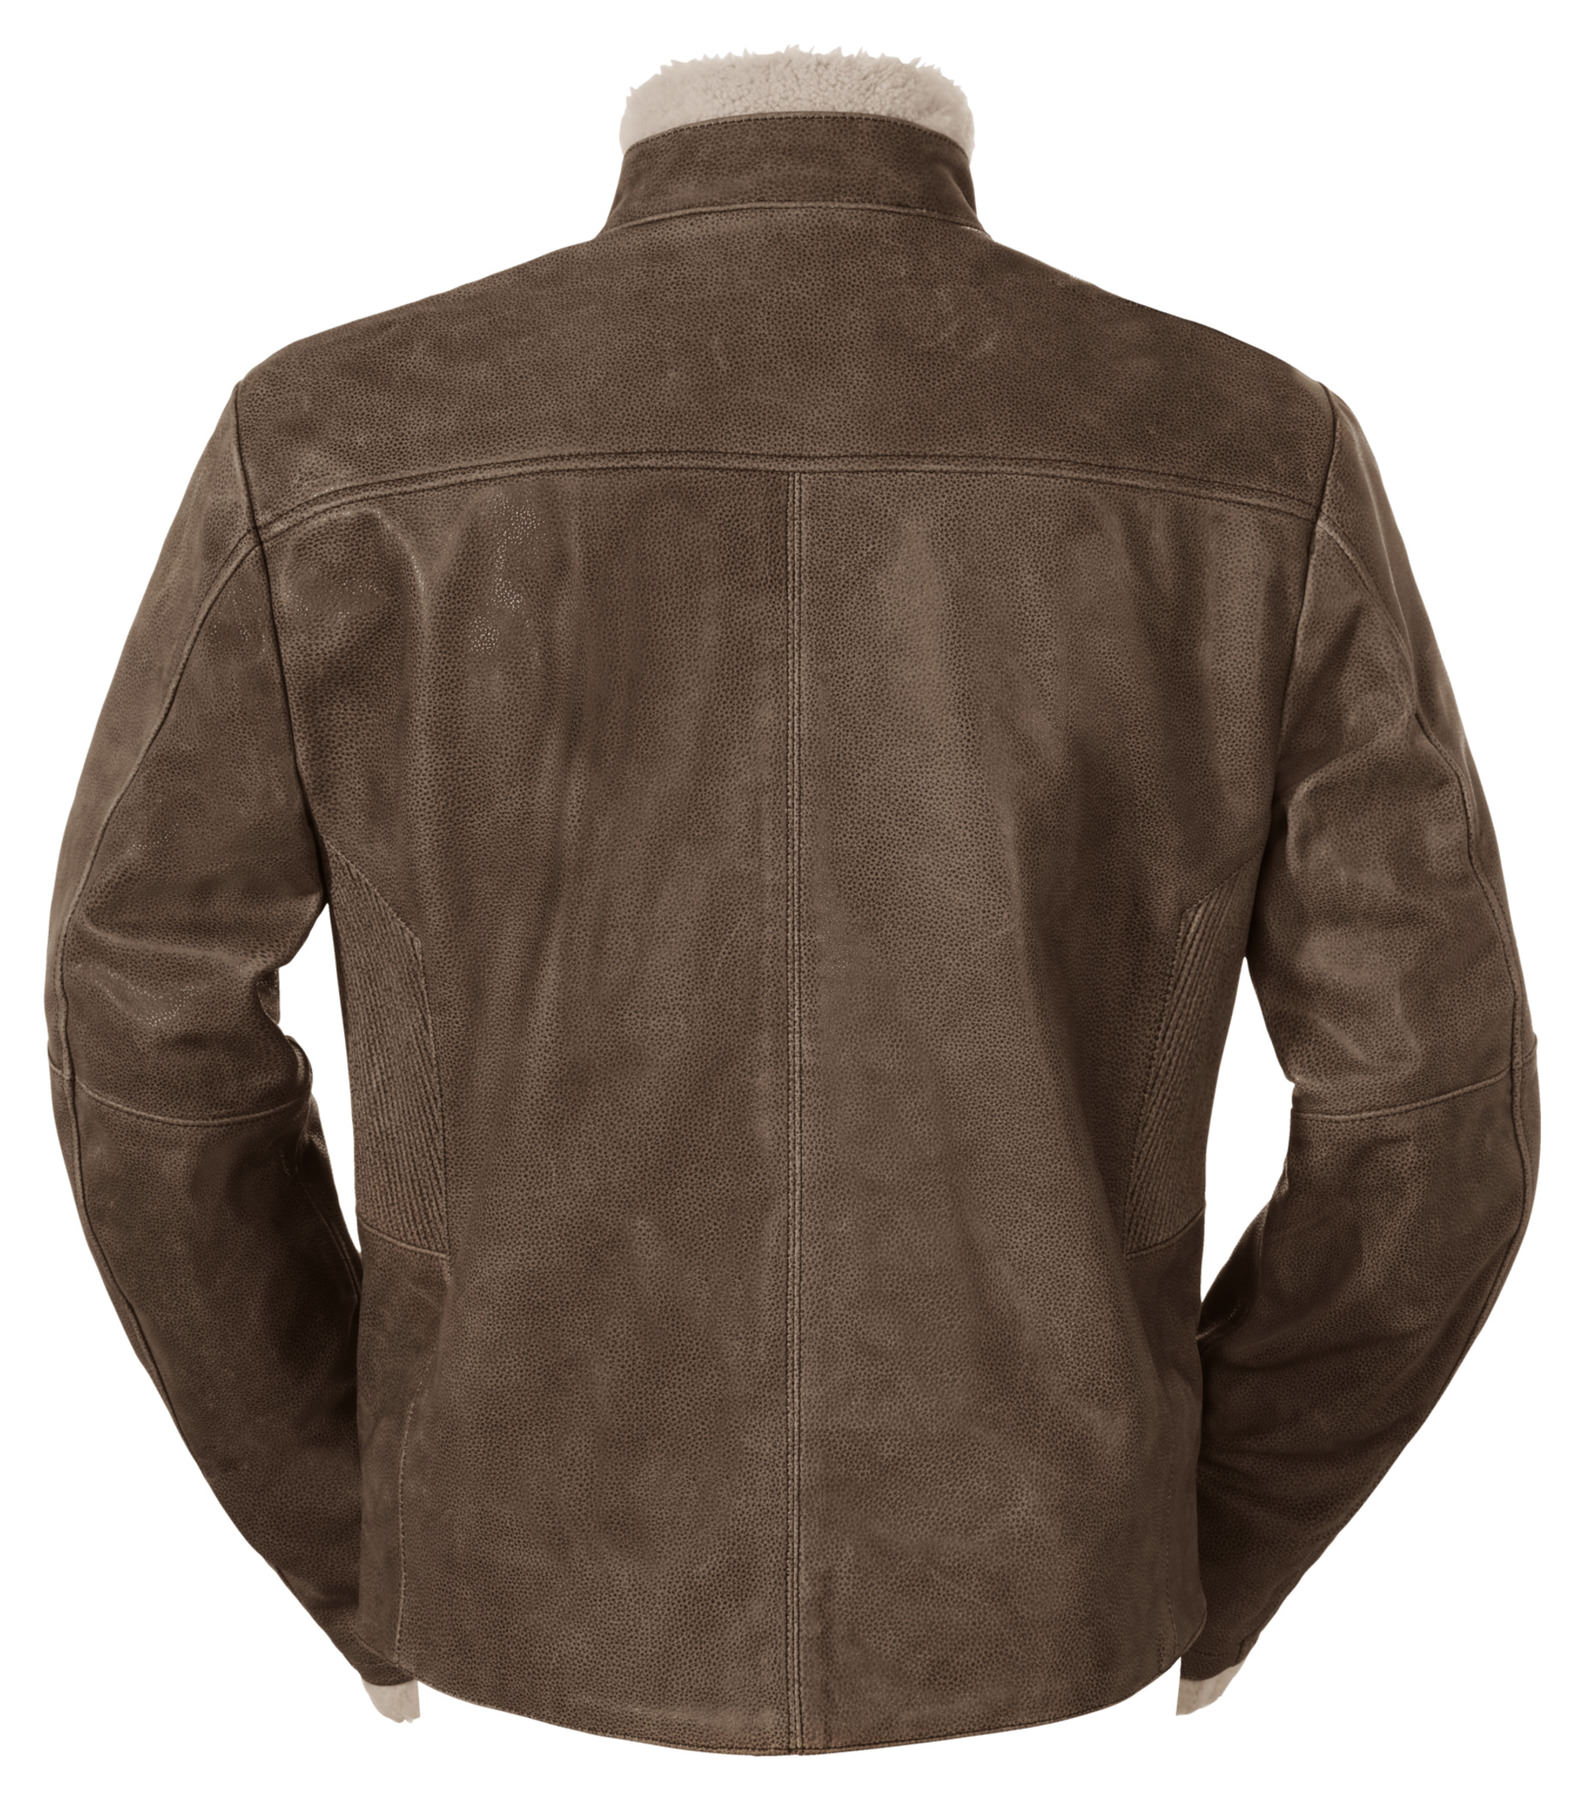 Detlev Louis Detlev Louis DL-JM-2 leather jacket